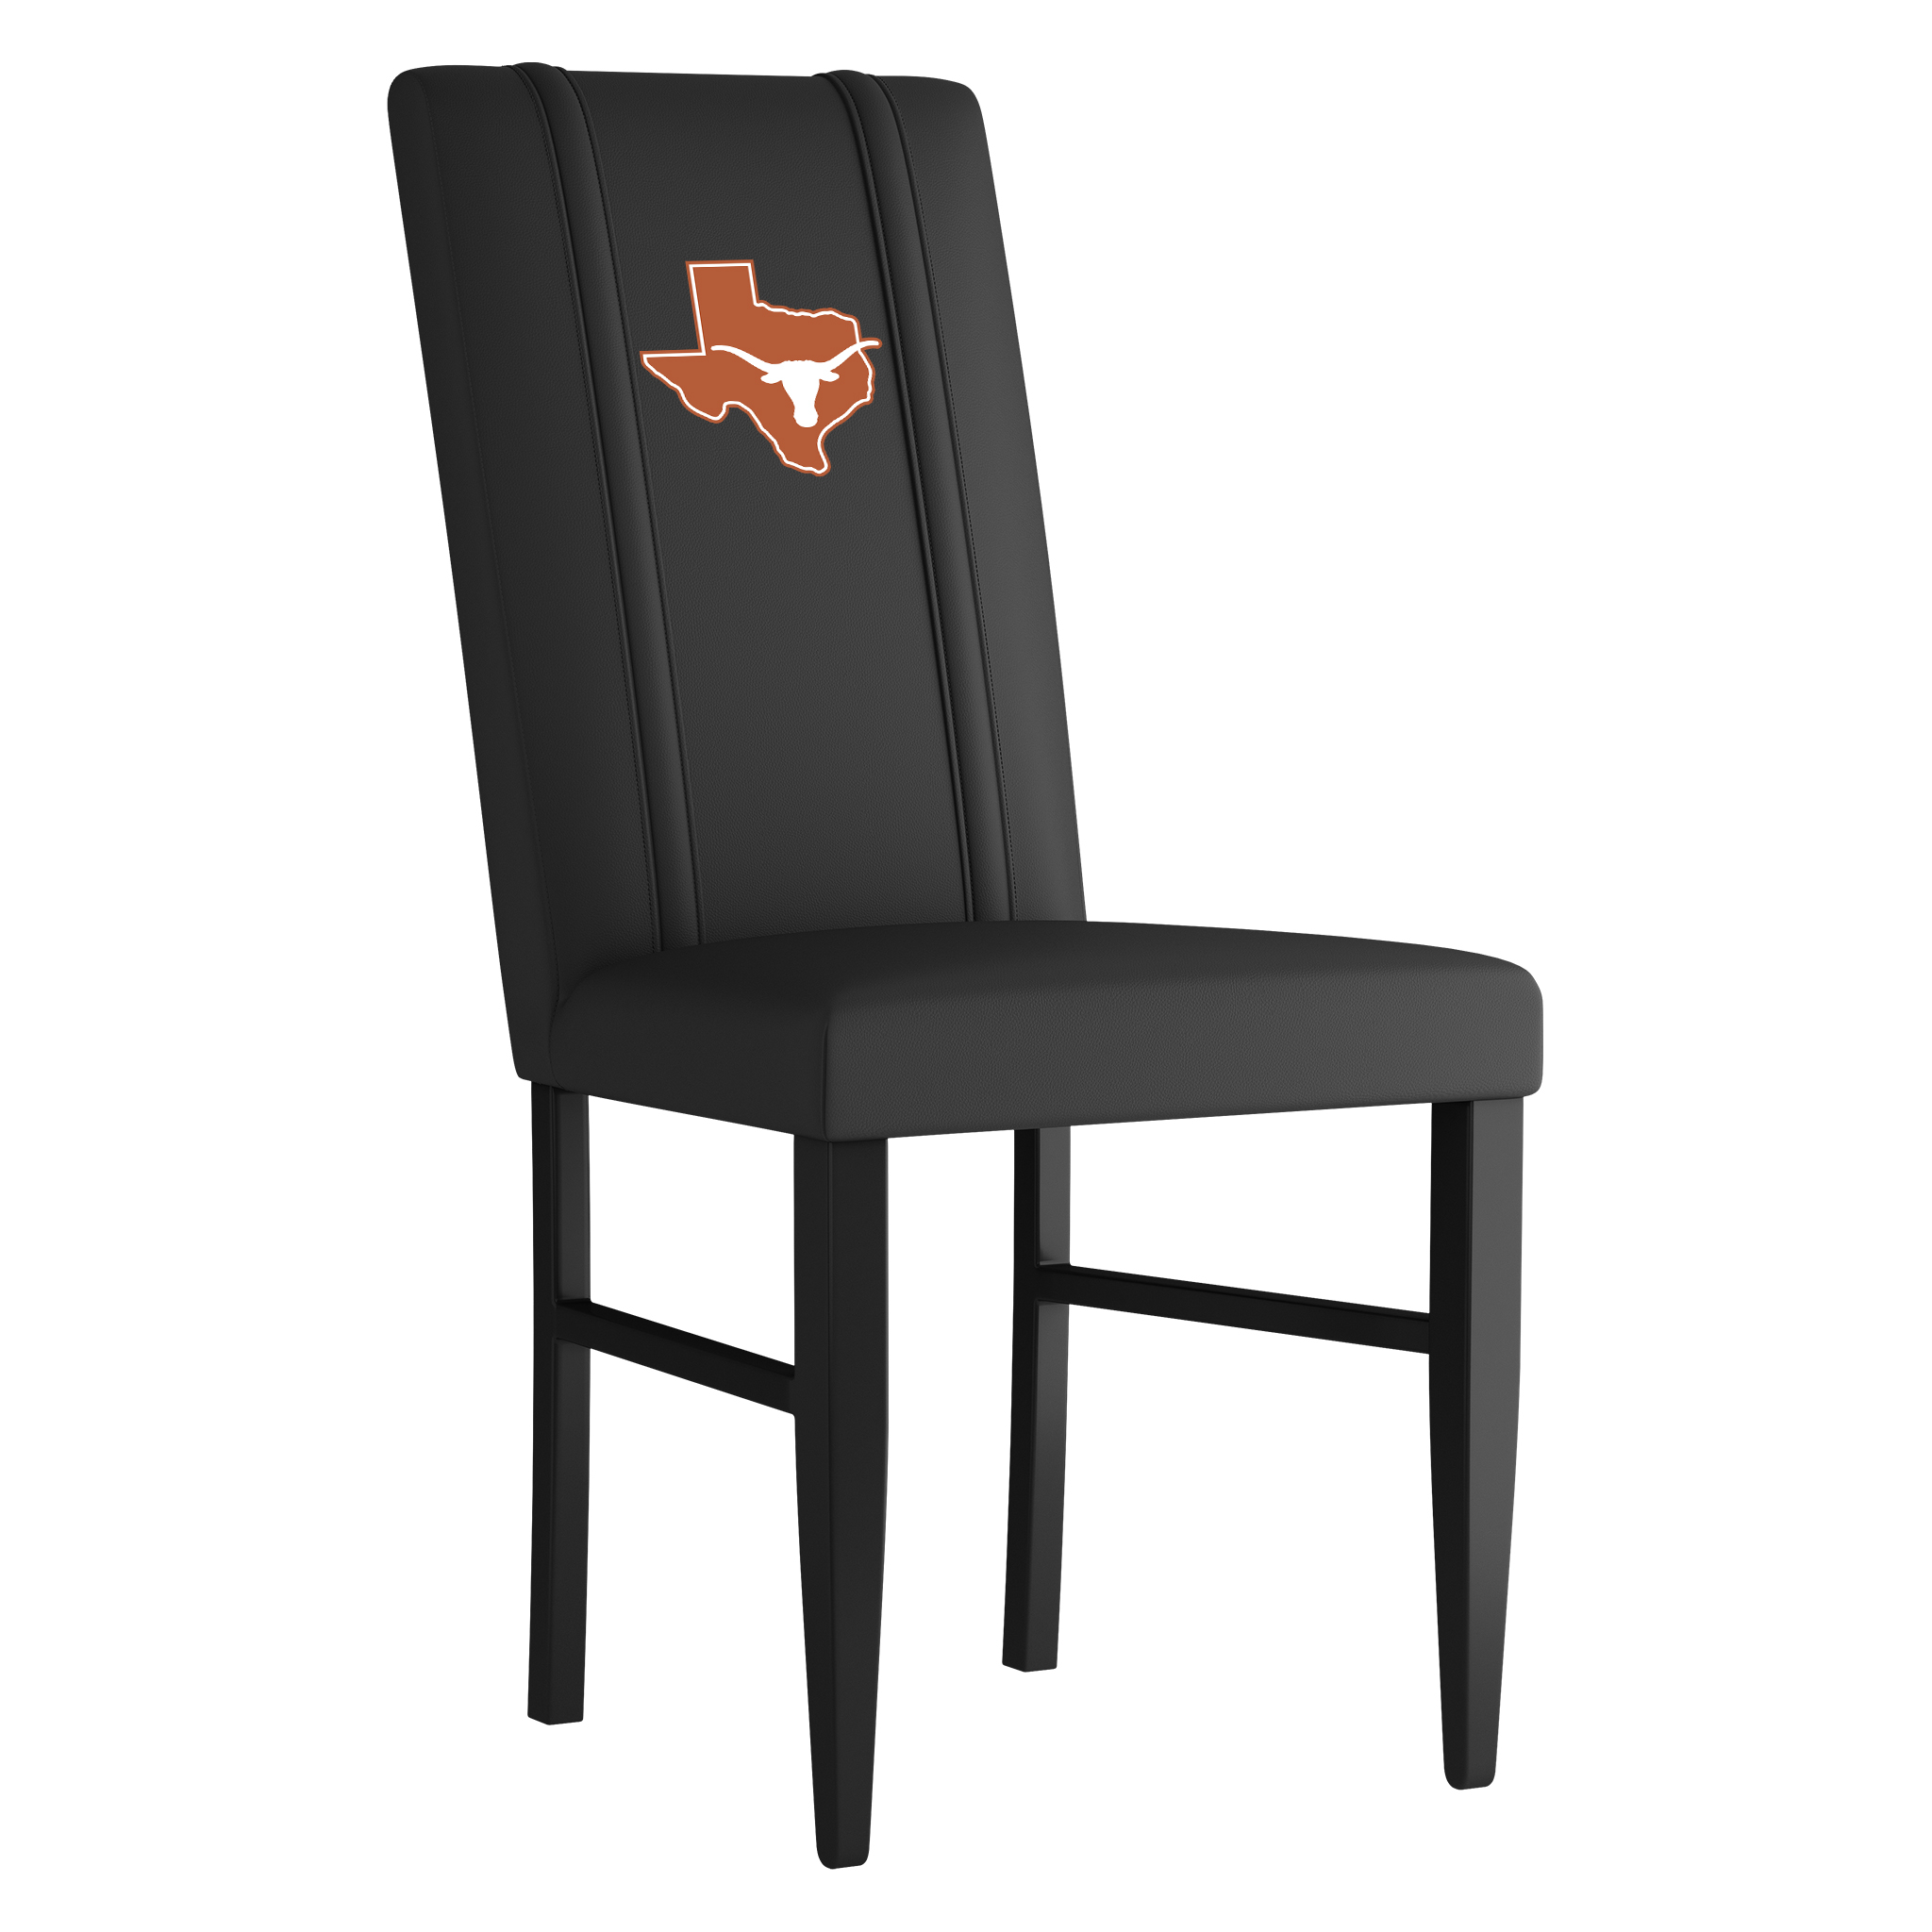 Texas Longhorns Side Chair 2000 With Texas Longhorns Secondary